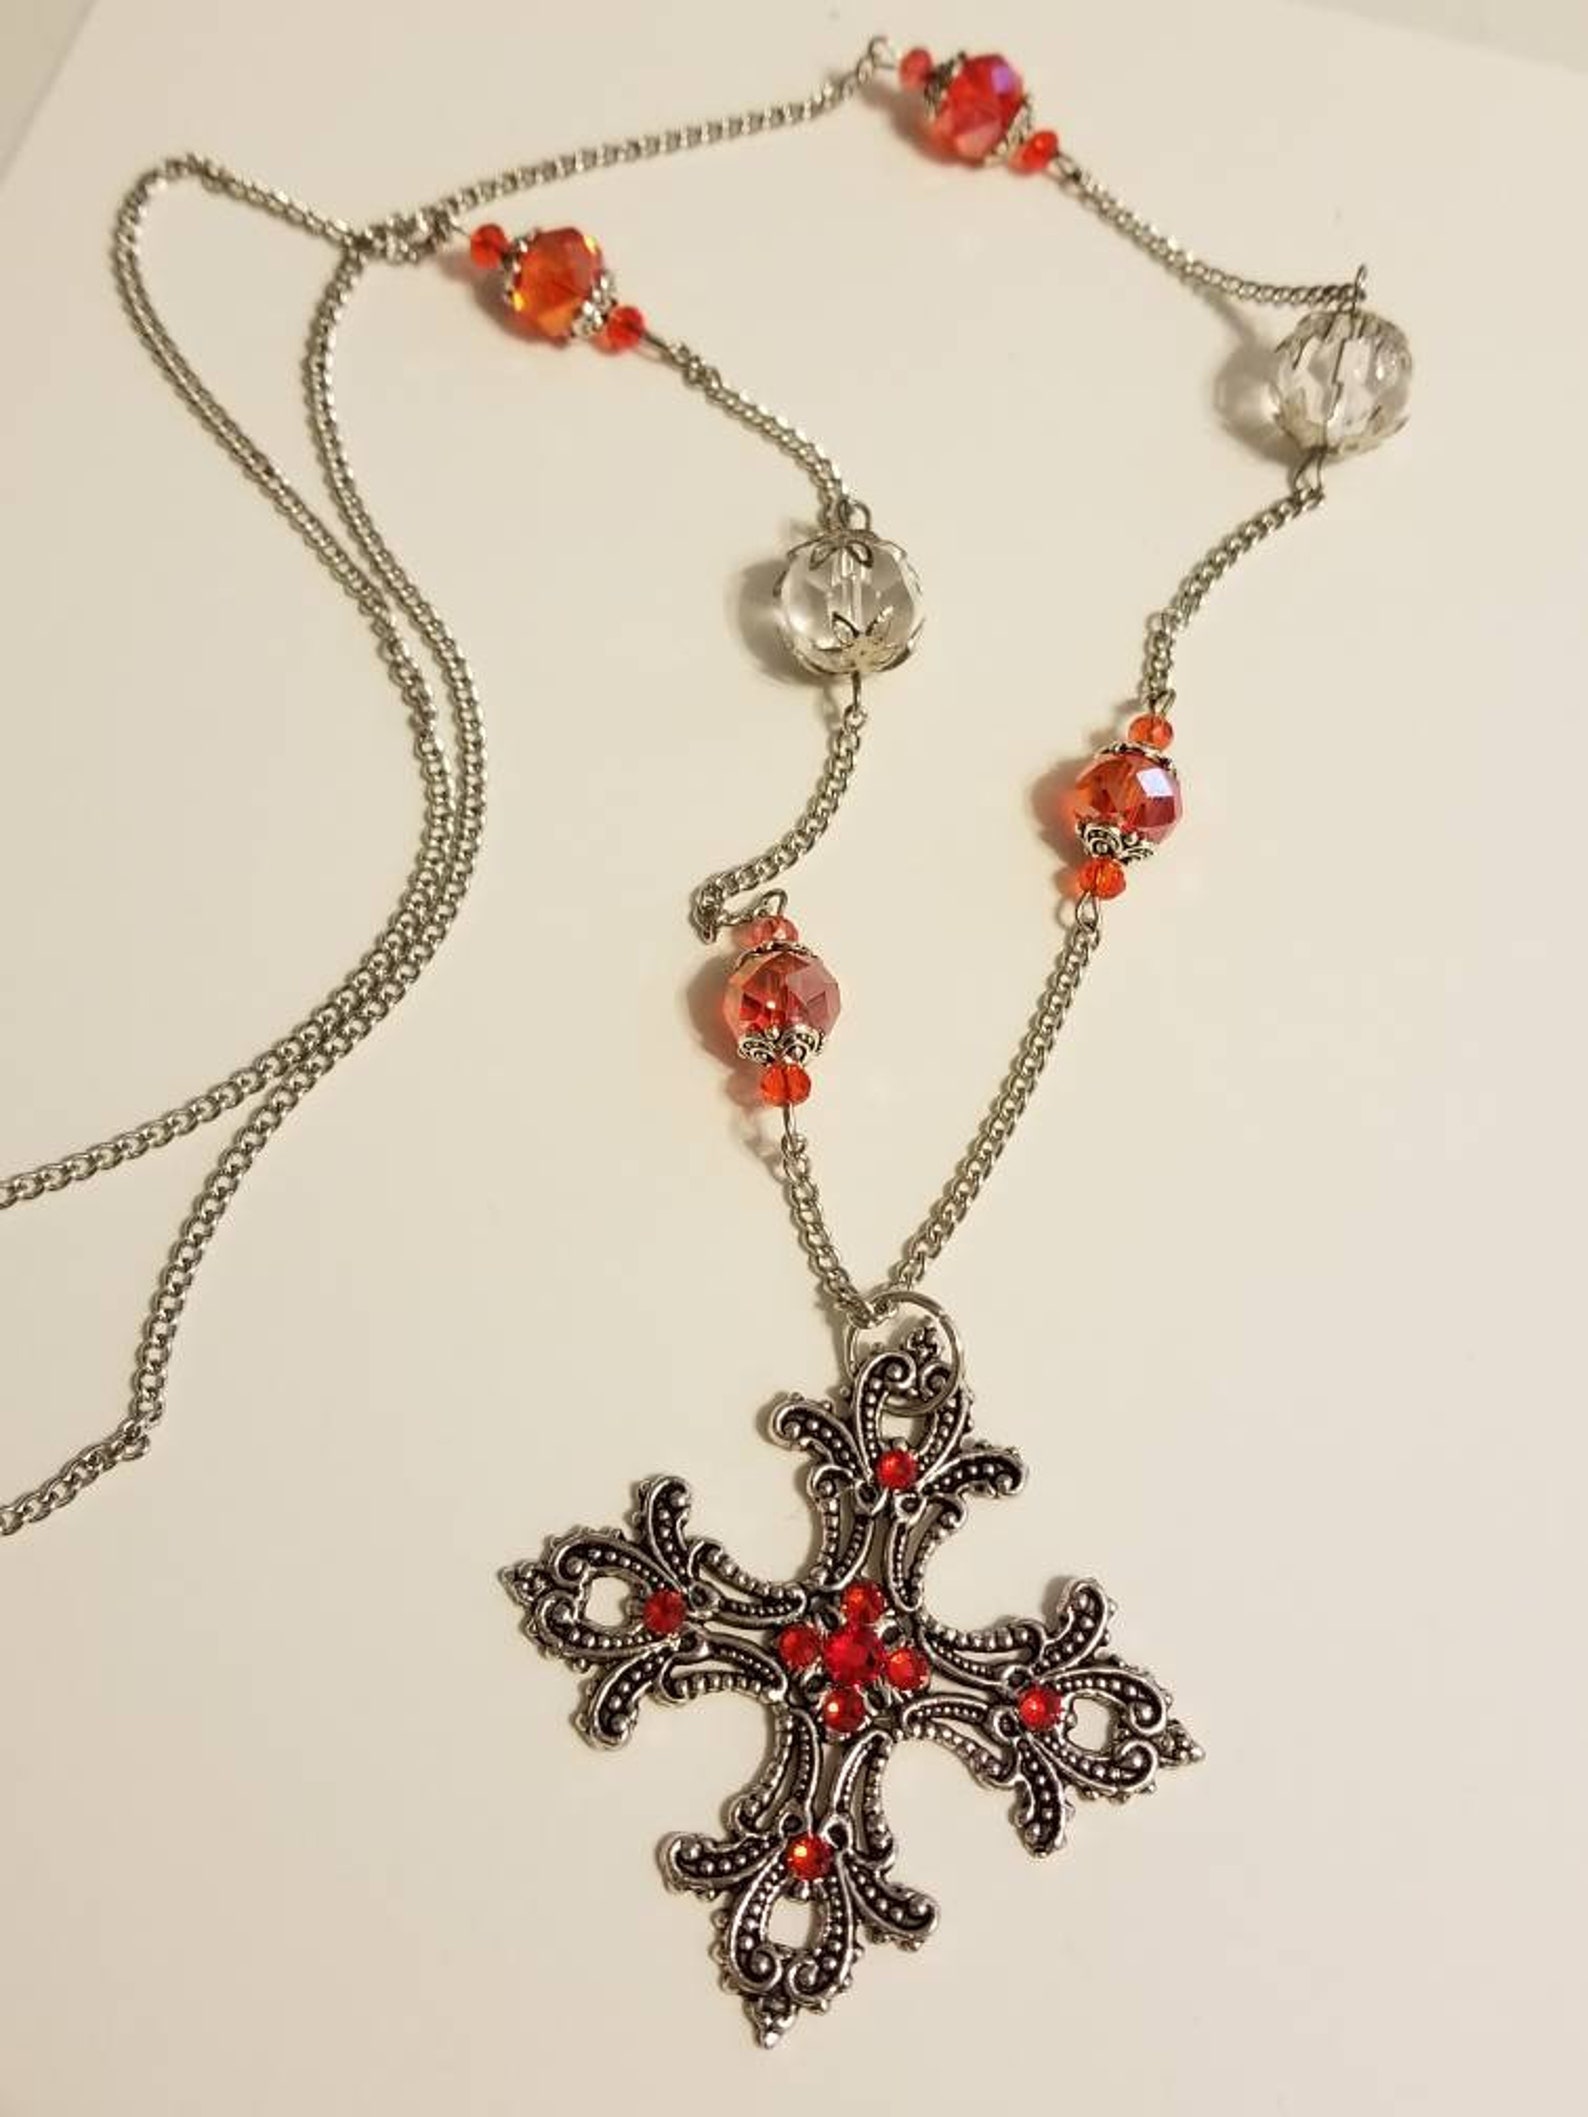 Large cross necklace red rhinestone cross pendant necklace | Etsy